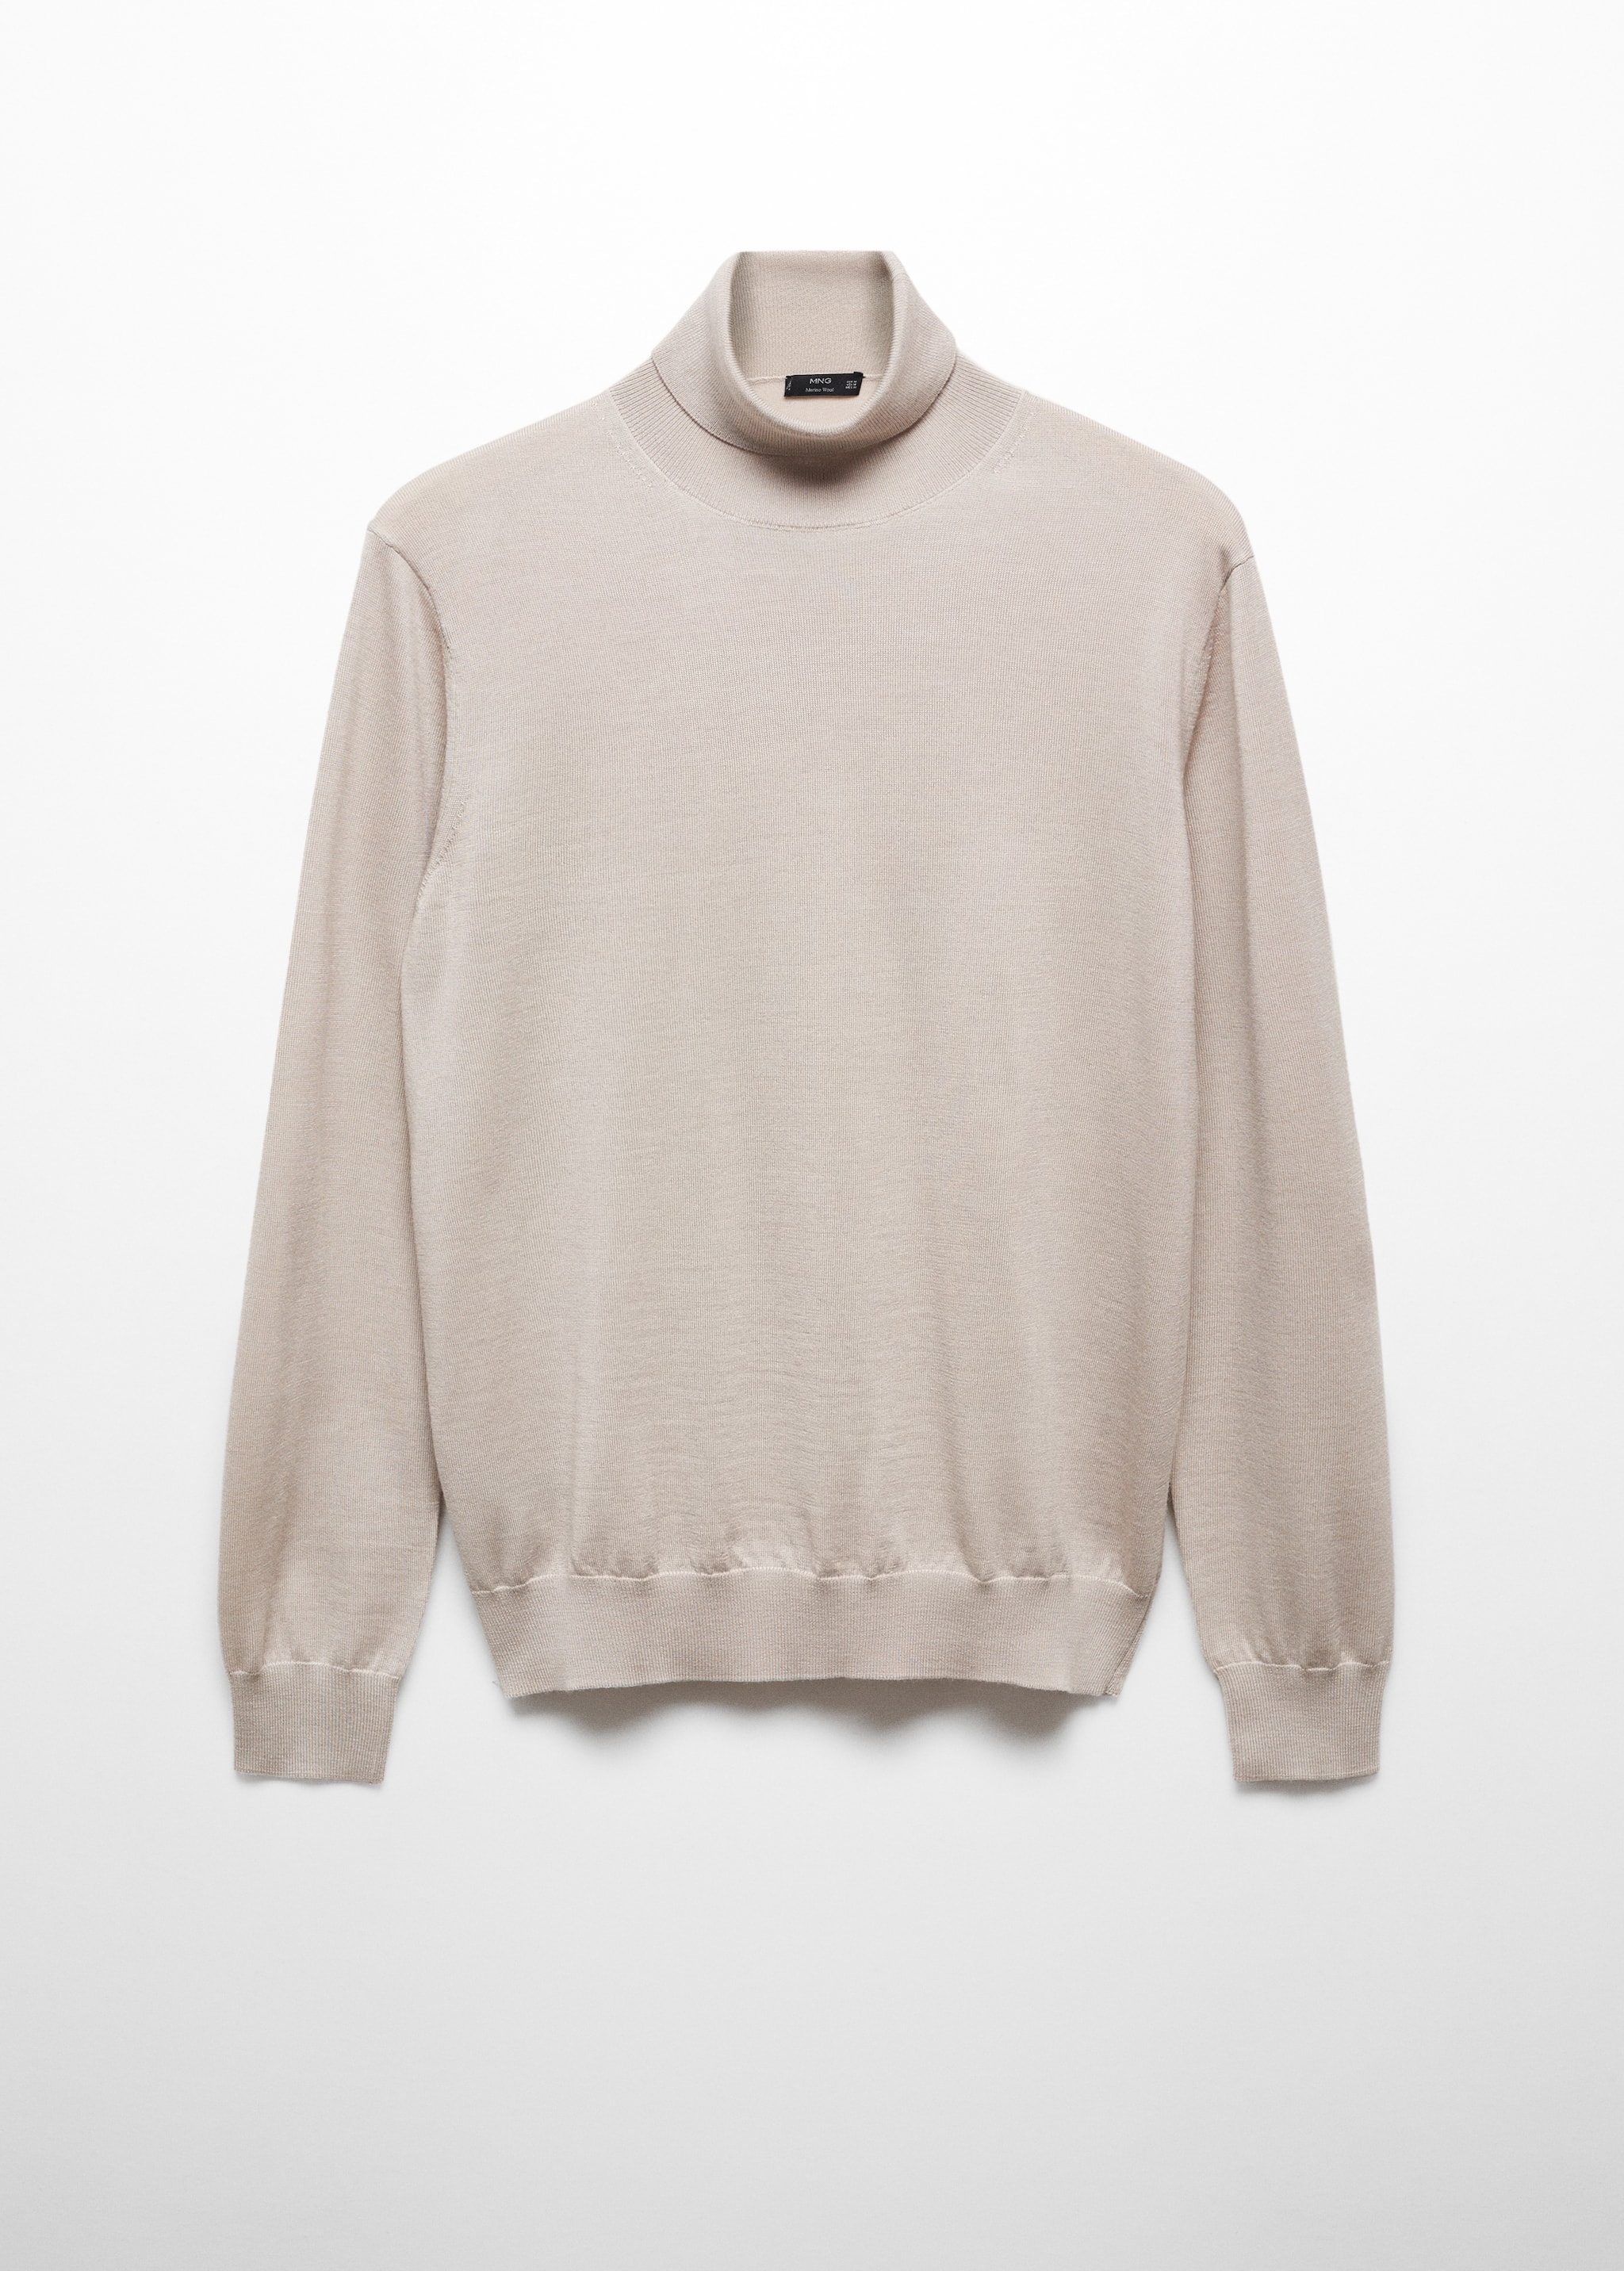 100% merino wool turtleneck sweater - Article without model